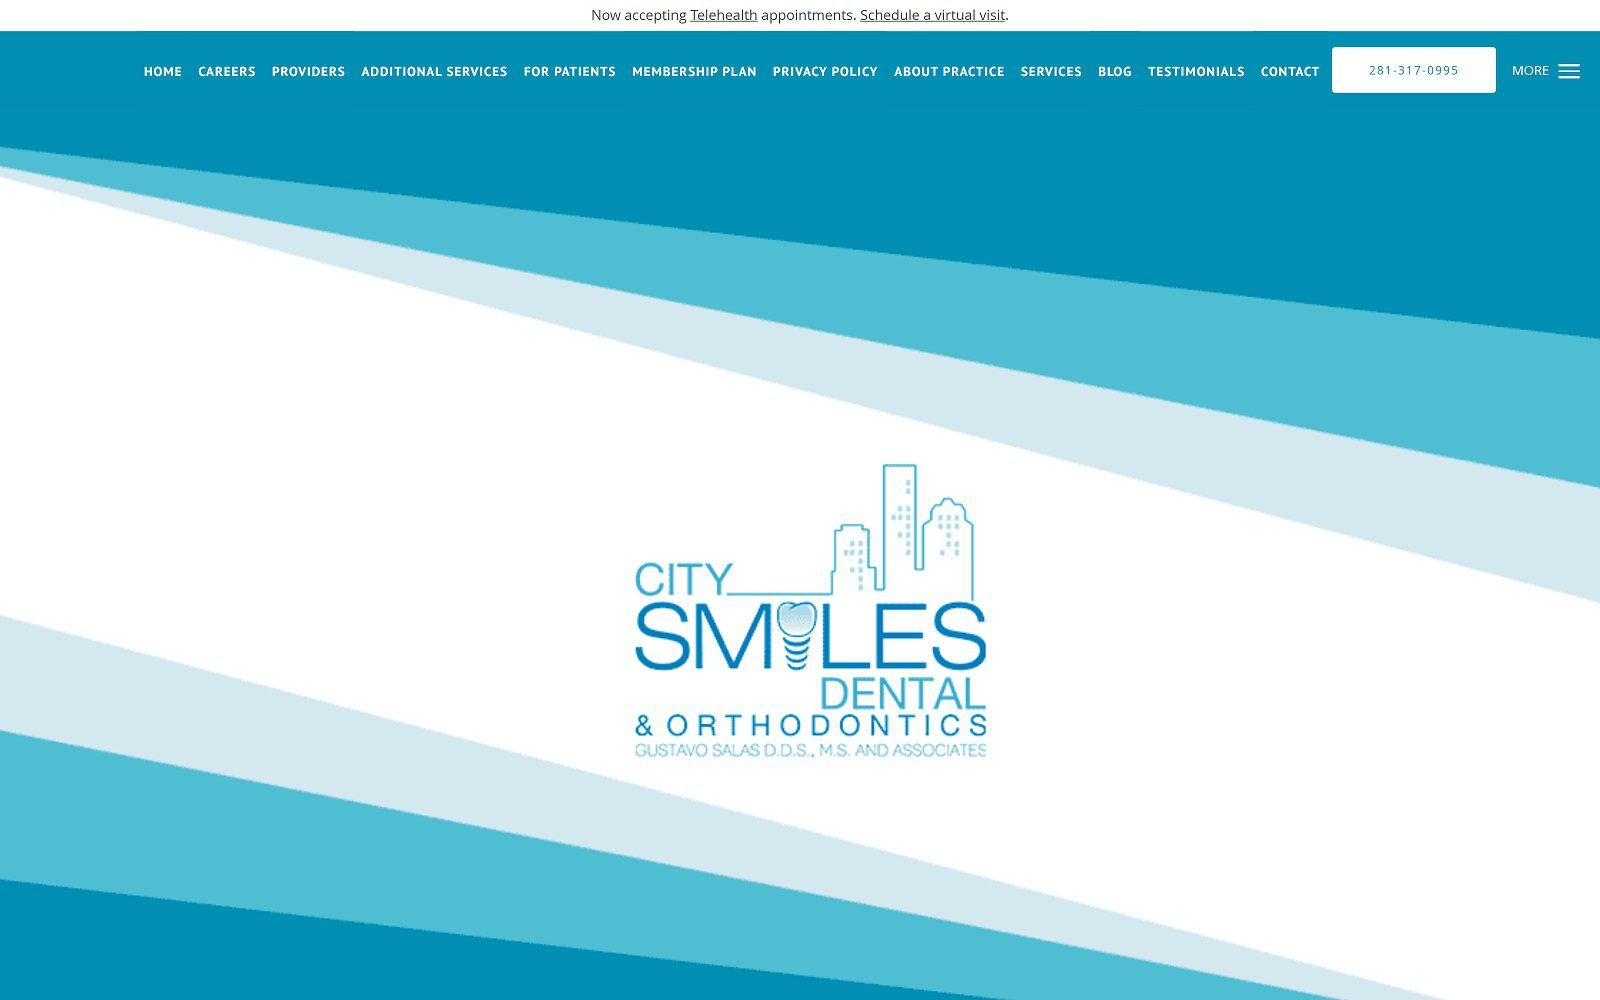 The screenshot of city smiles dental and orthodontics website